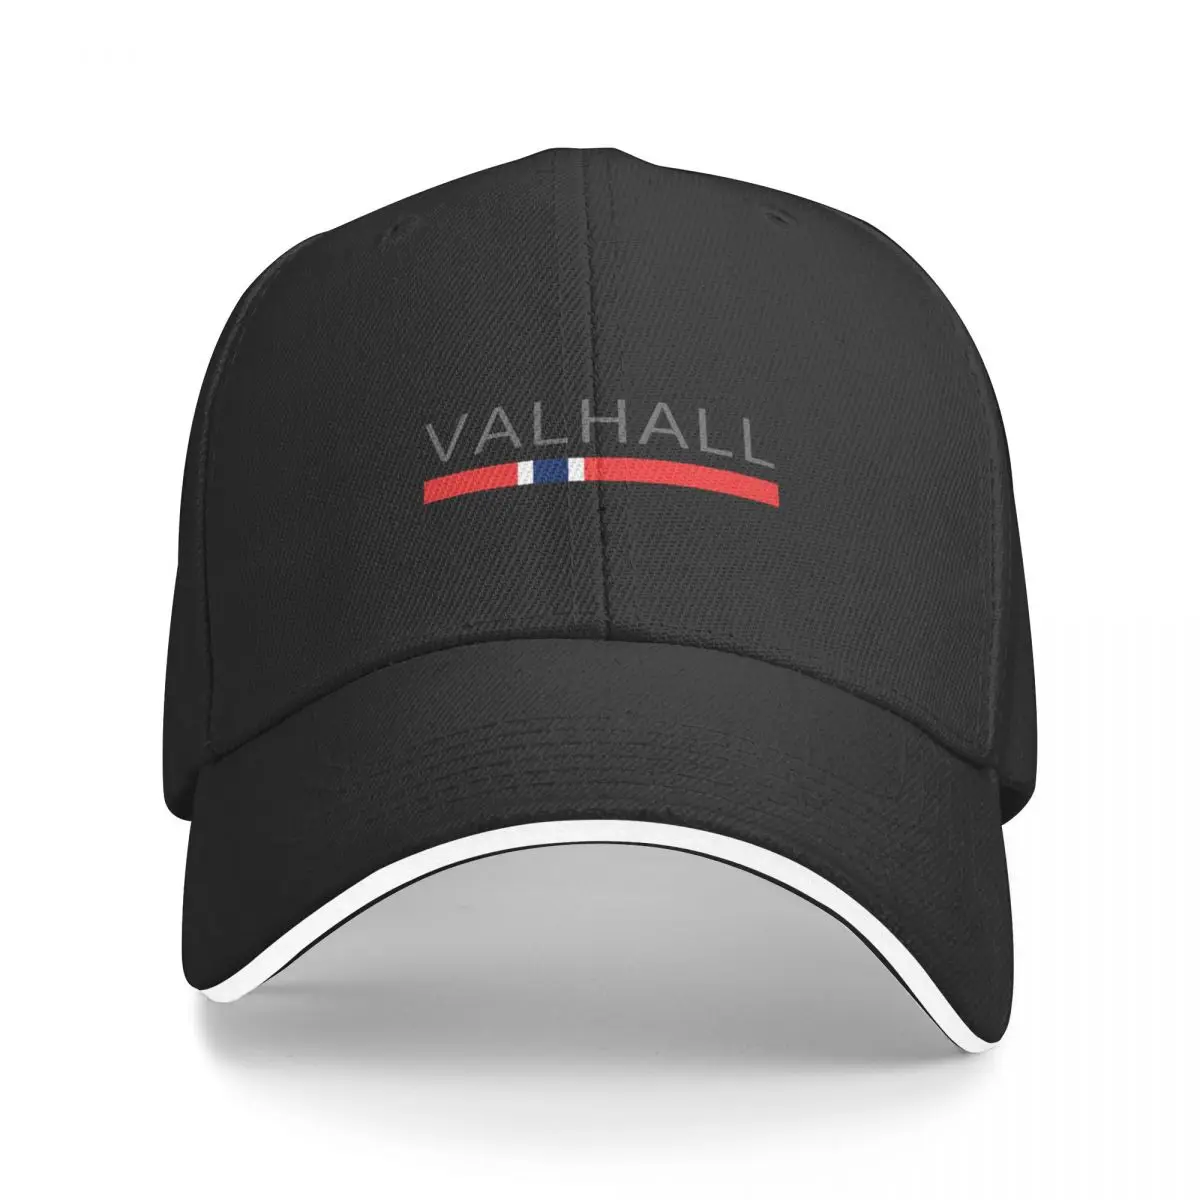 

New Valhall Viking | Valhalla Norway Baseball Cap fashionable beach hat Hip Hop New In Hat Hat Women Men's